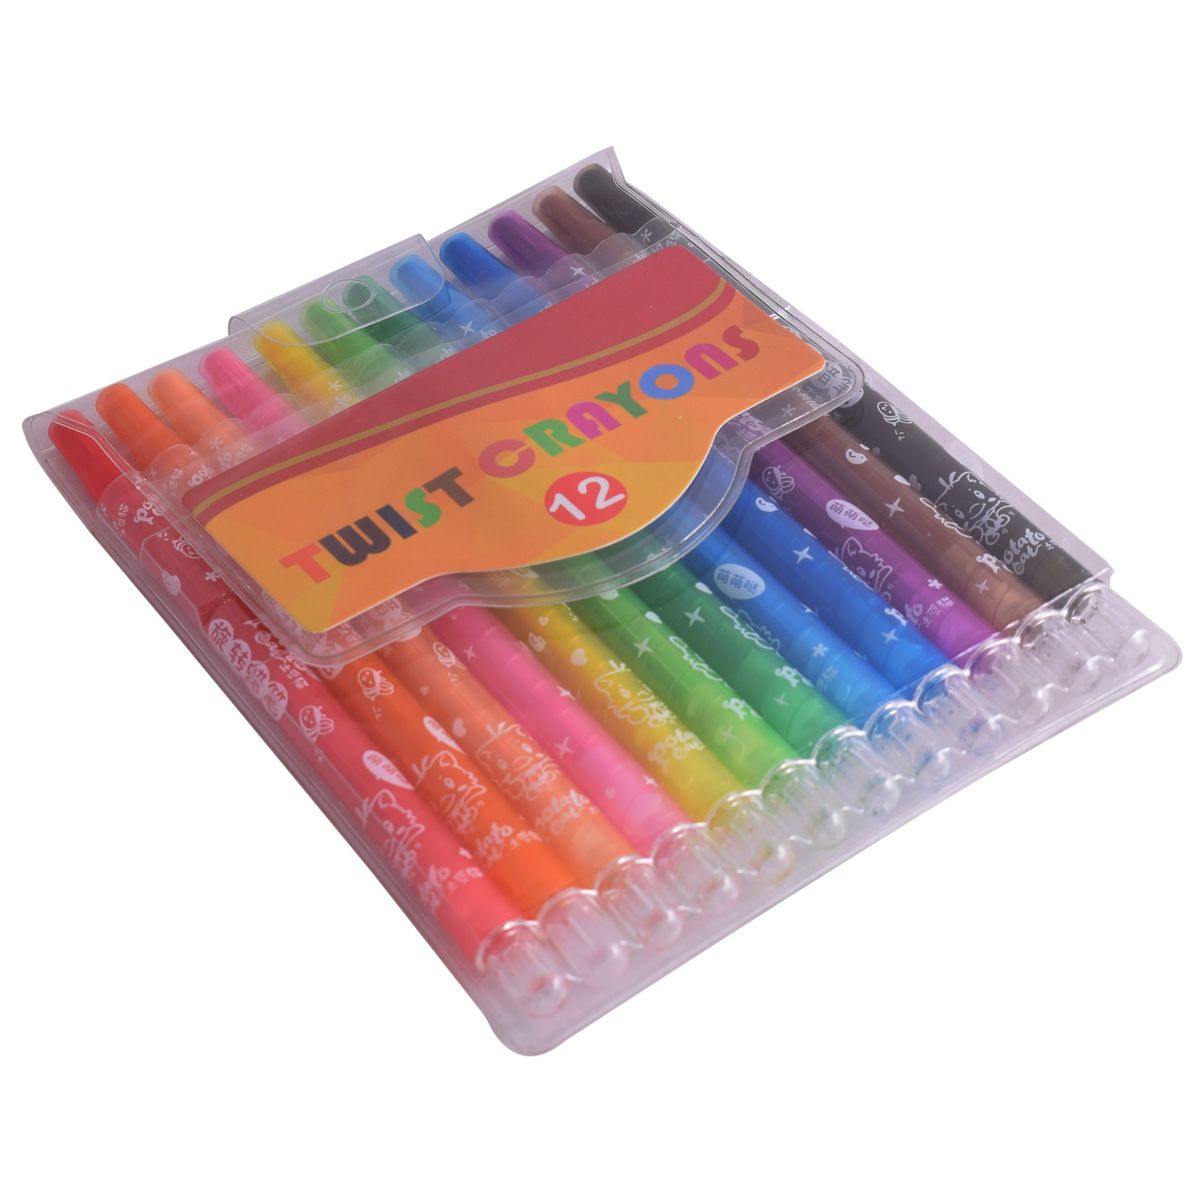 Mungyo Twist-Up Crayon 6colors set.MTC-6 – Habitt